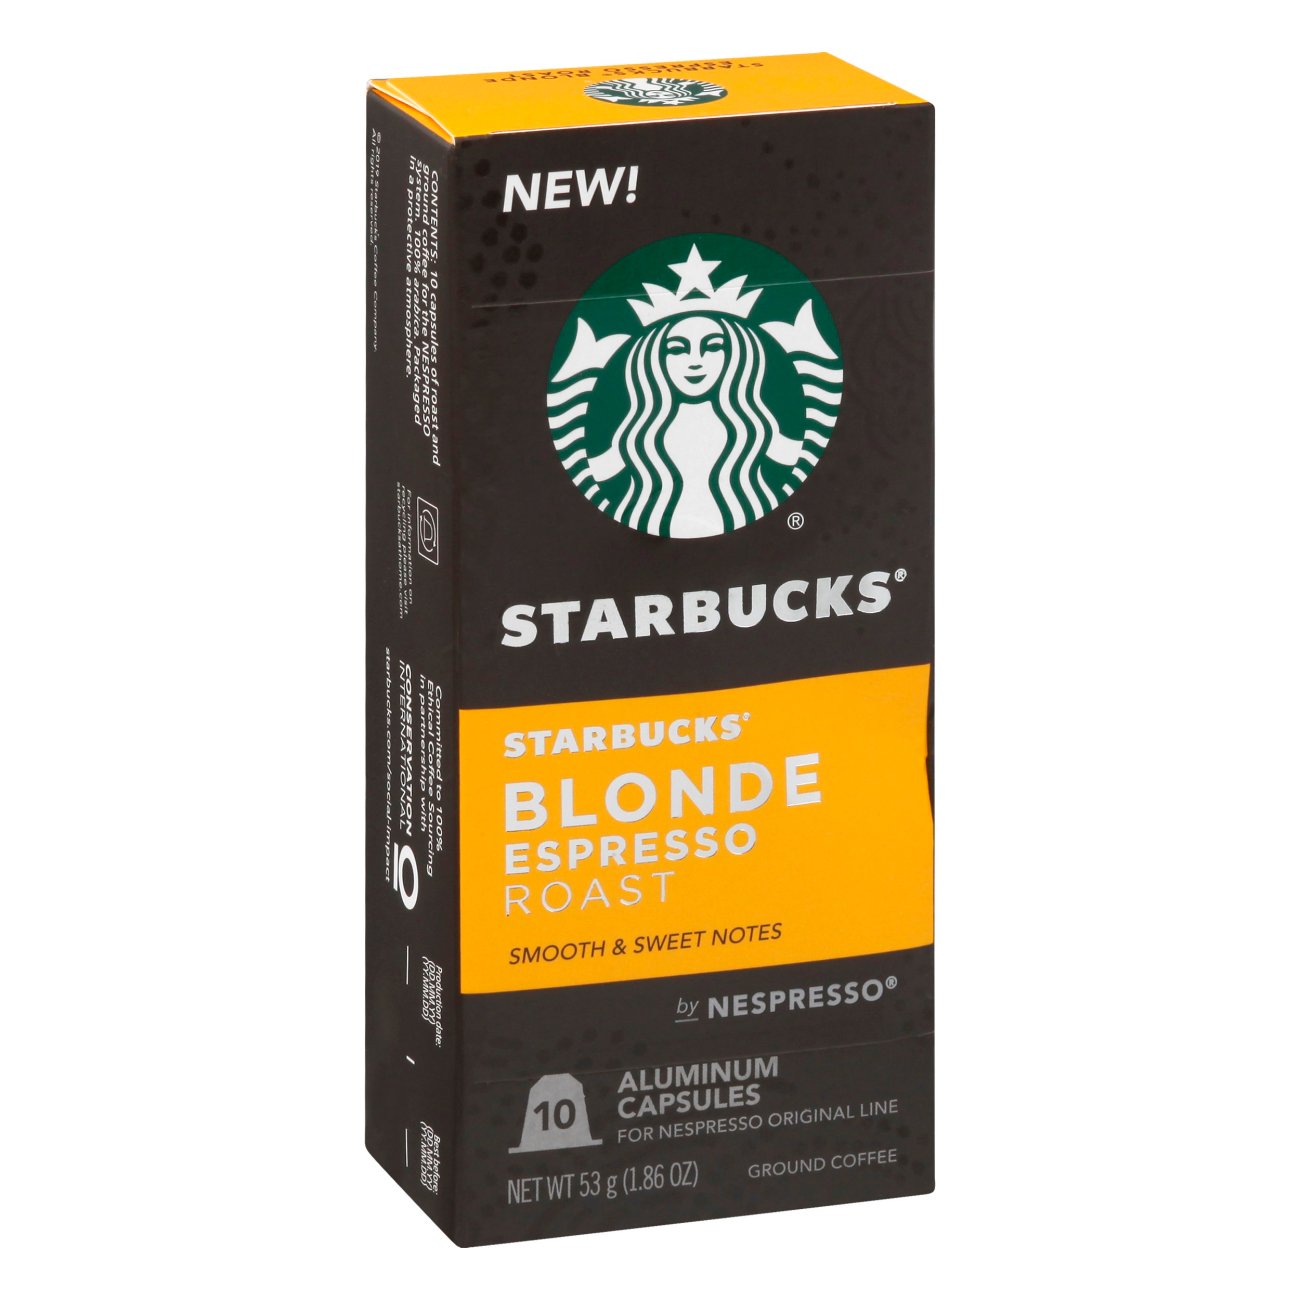 Starbucks by Nespresso Blonde Espresso Roast Capsules, 60 Count